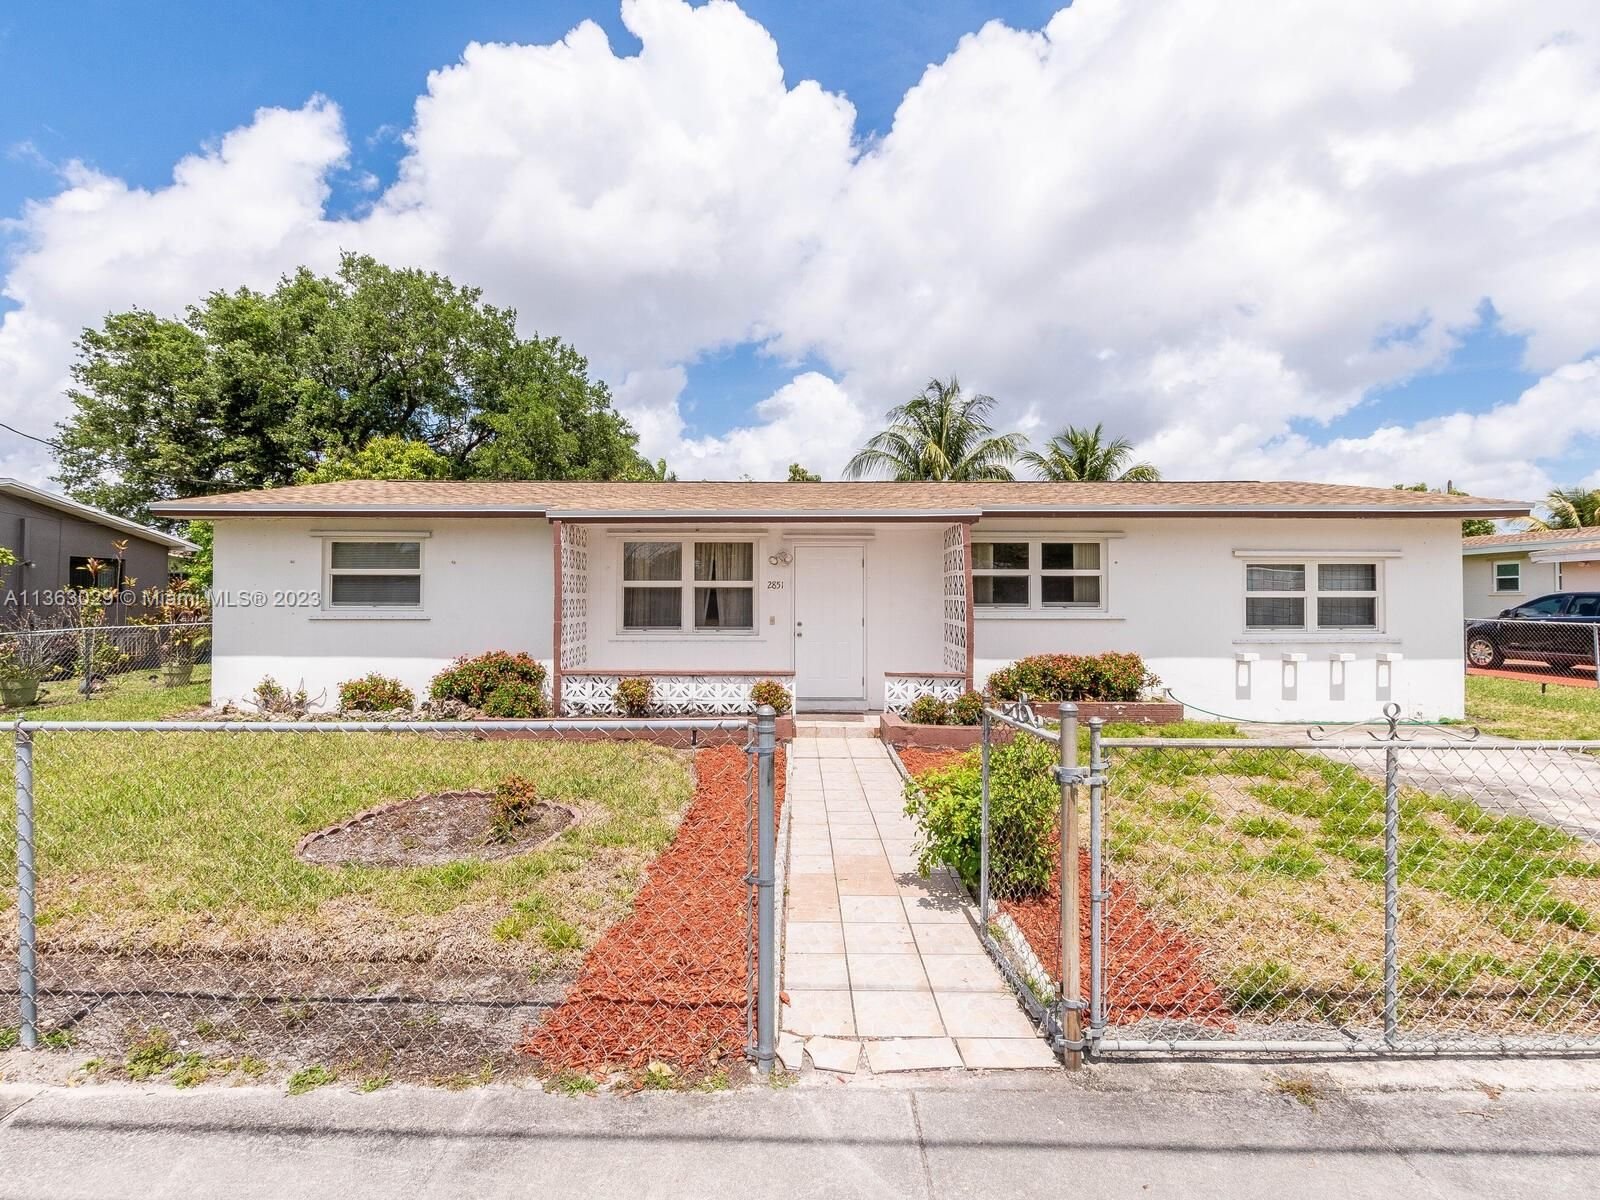 Real estate property located at 2851 175th St, Miami-Dade County, Miami Gardens, FL